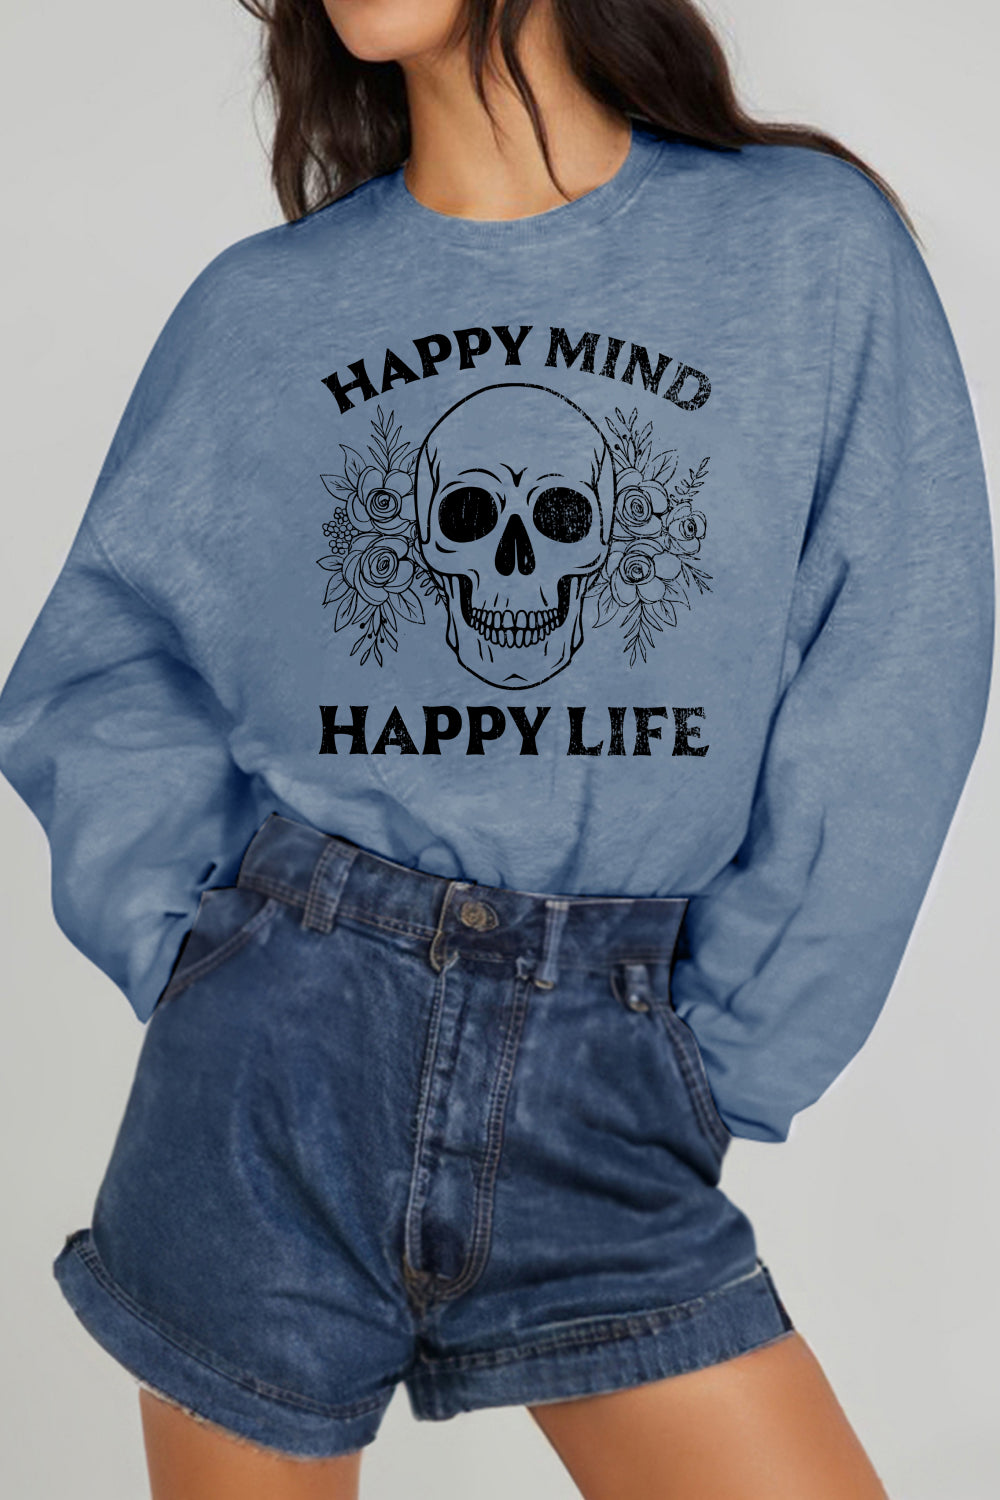 Simply Love Simply Love Full Size HAPPY MIND HAPPY LIFE SKULL Graphic Sweatshirt